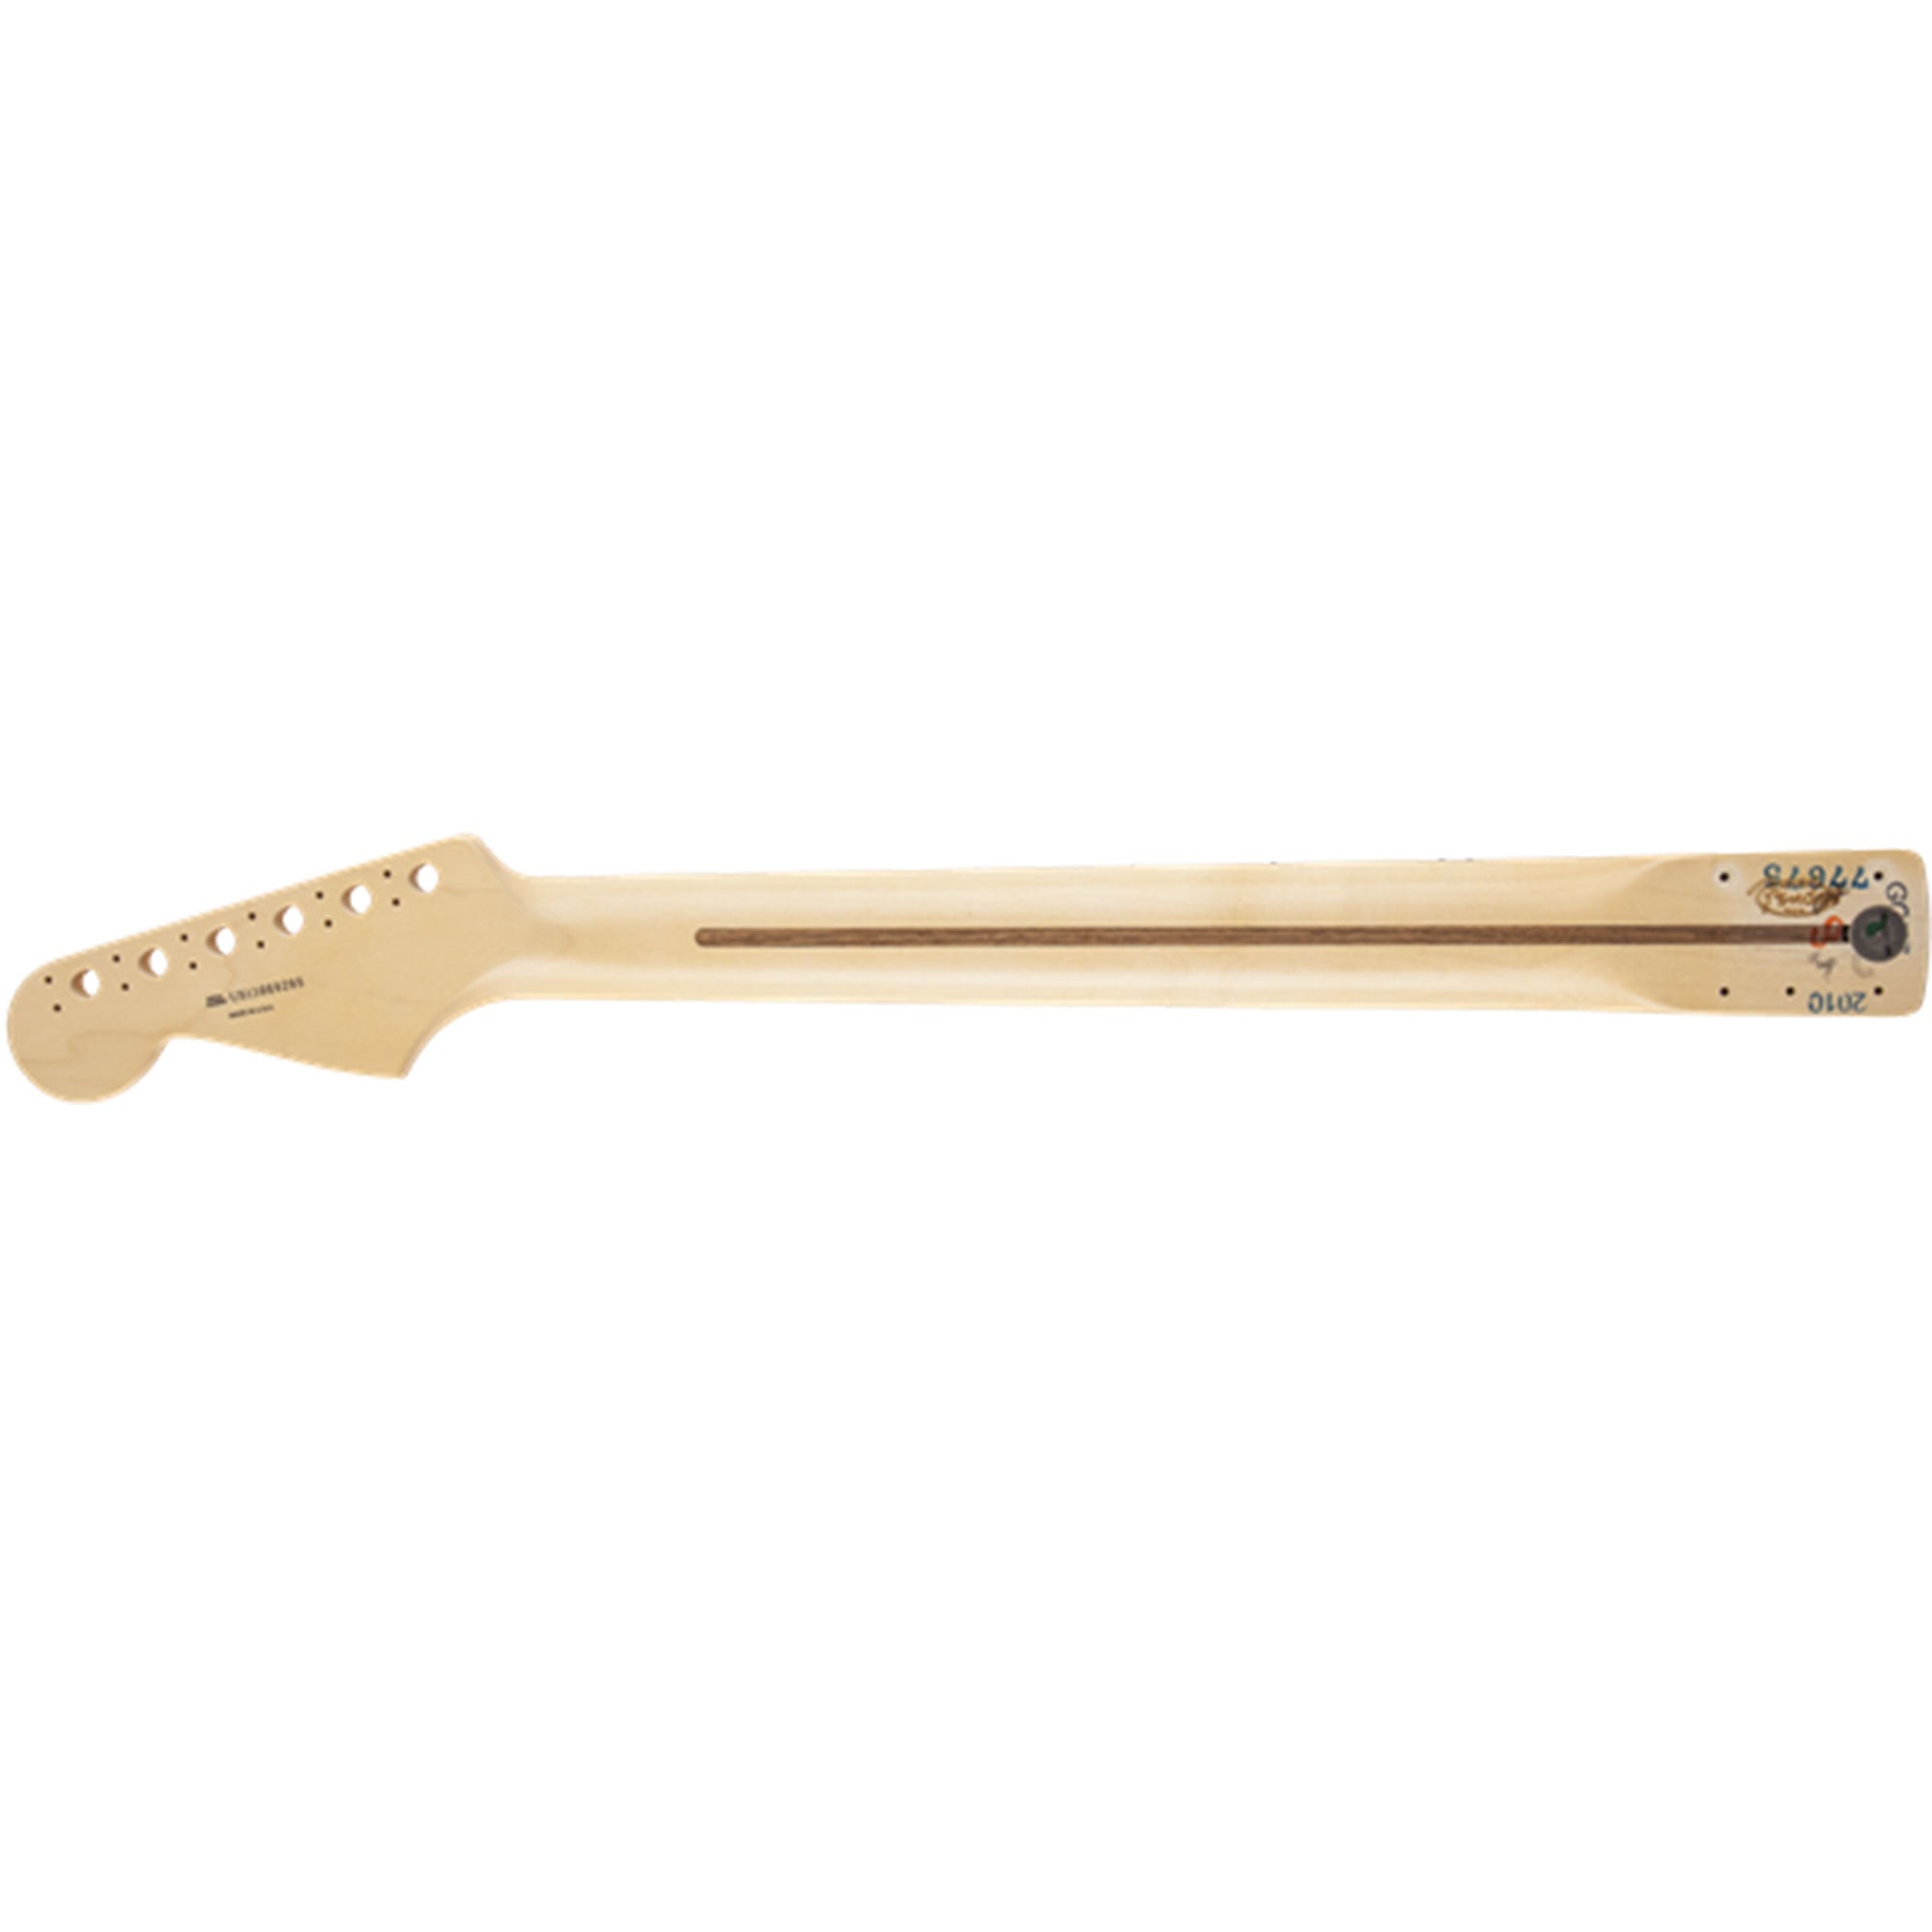 Fender American Deluxe Stratocaster Neck Maple Fretboard | The